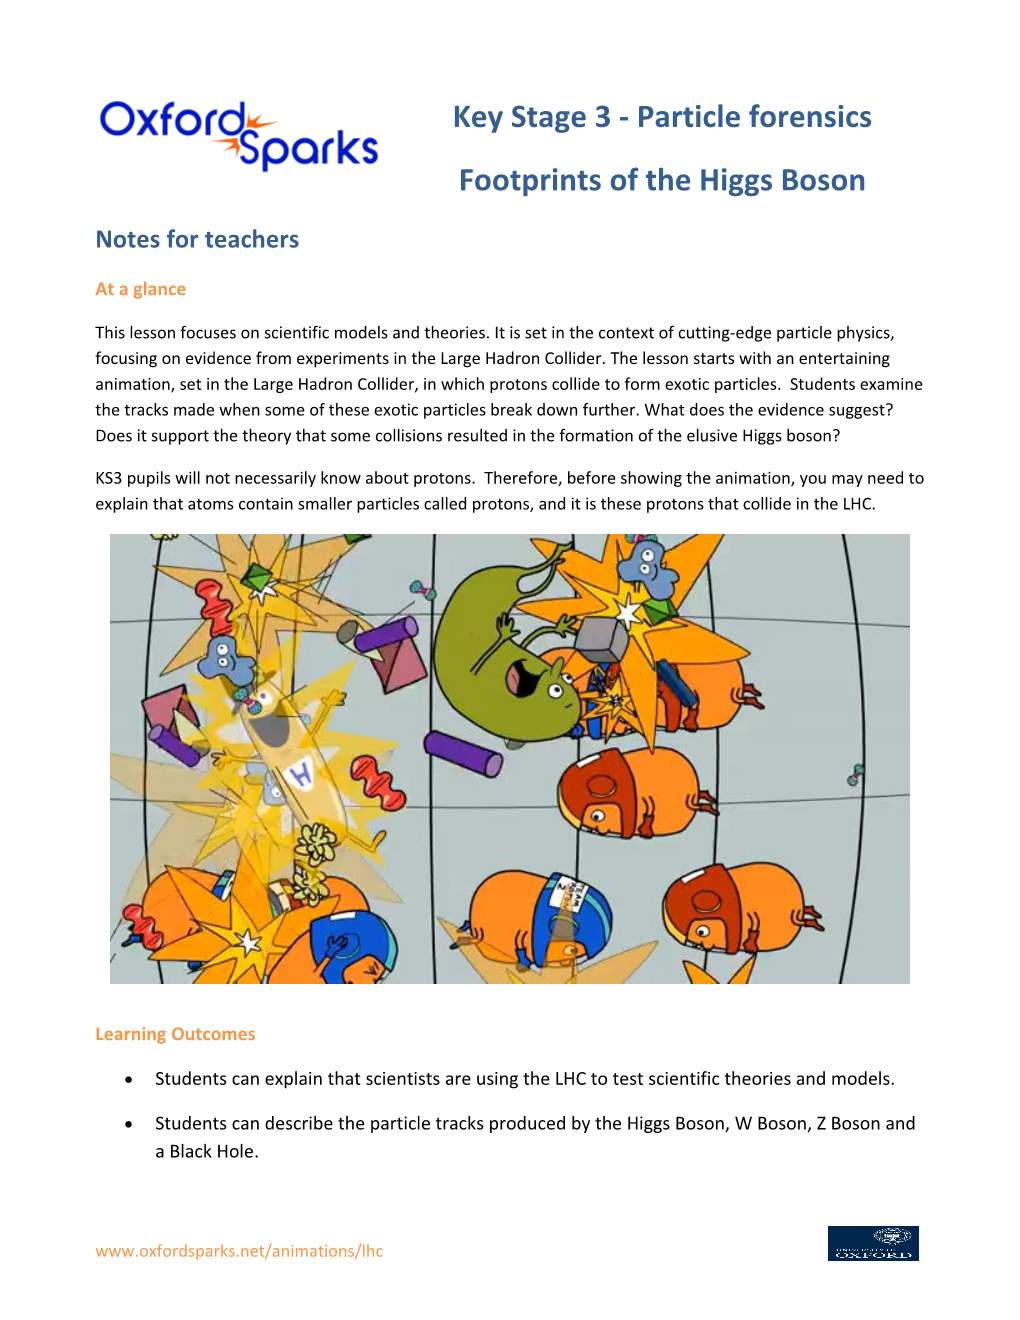 Footprints of the Higgs Boson